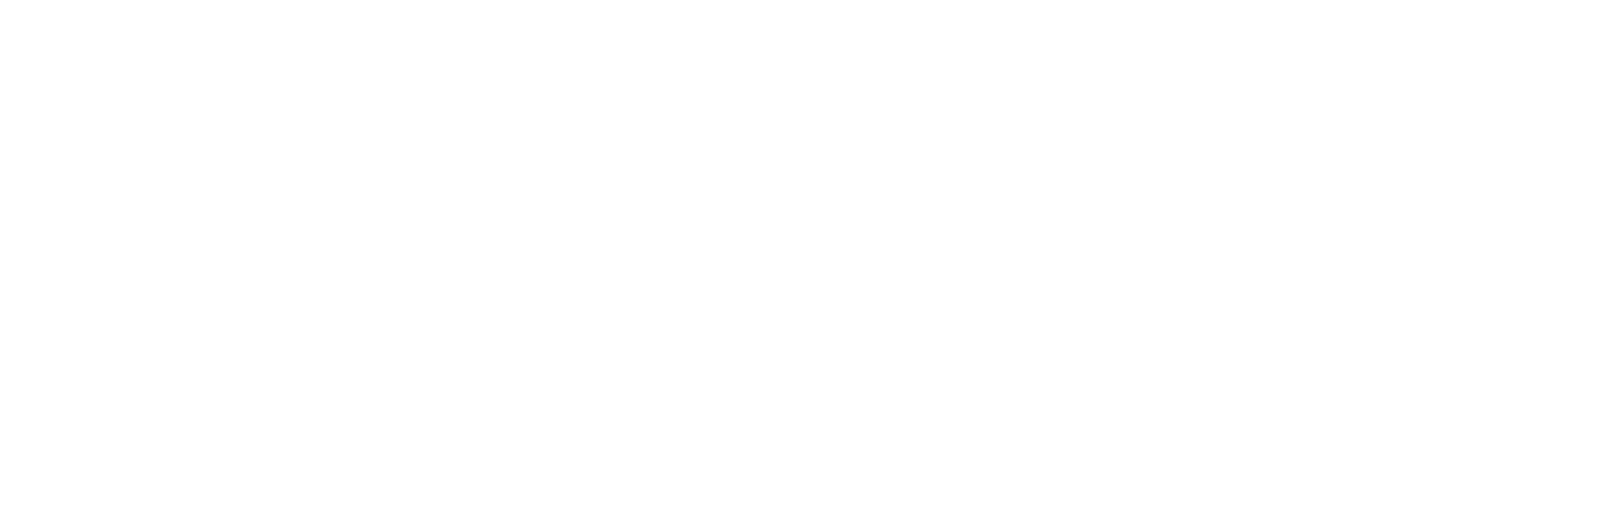 First Presbyterian Church Quincy